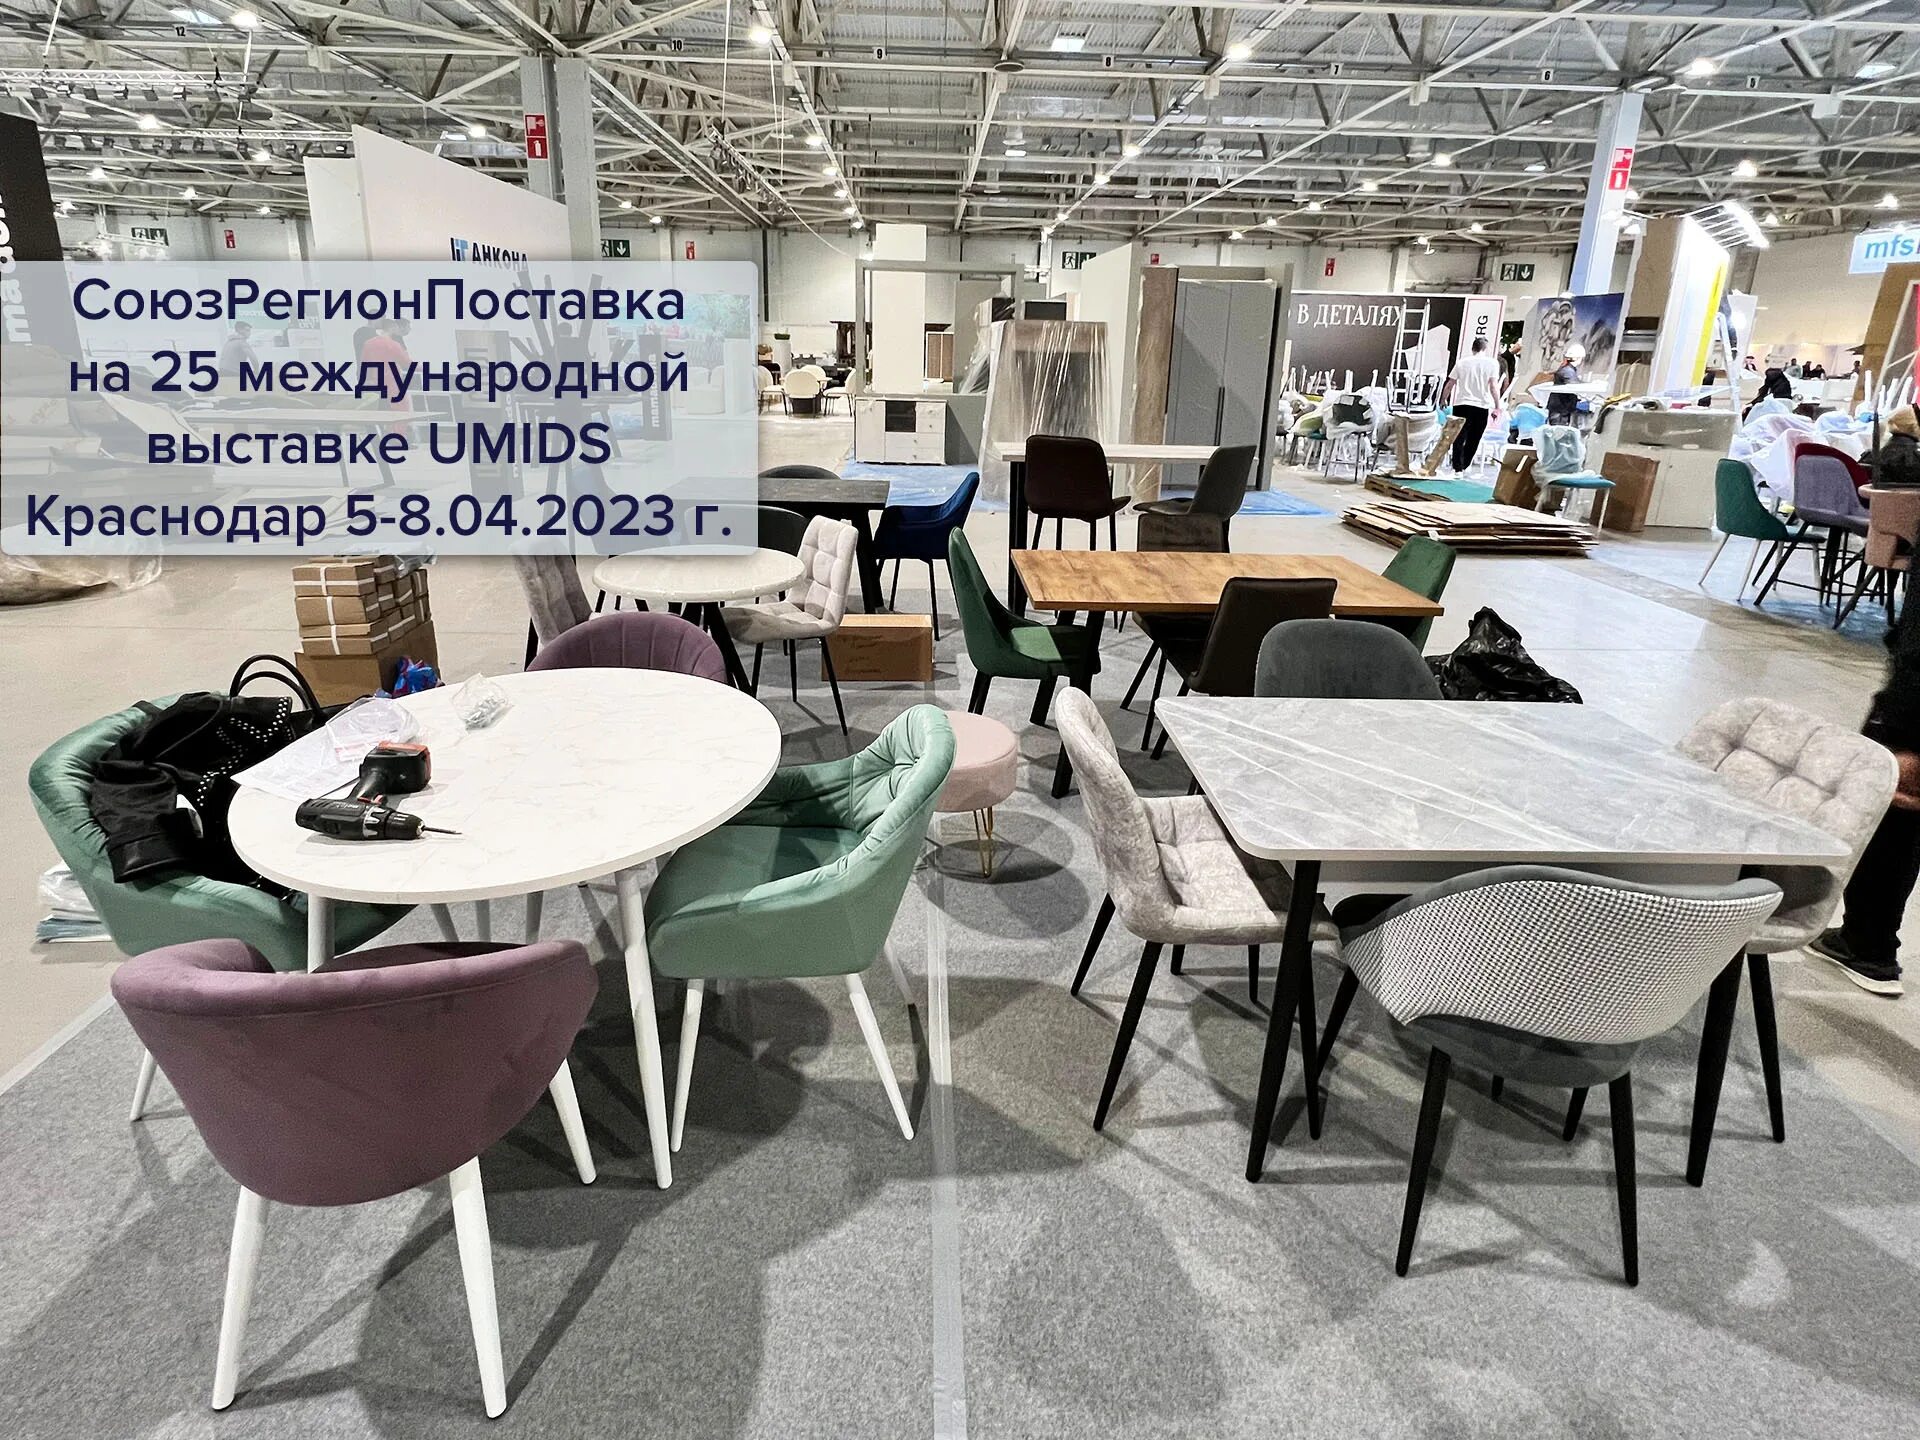 Umids 2023 Краснодар. Выставка Юмидс Краснодар 2023. Выставка мебель 2023. Выставка мебели в Краснодаре 2023. Выставка мебели в краснодаре 2024 году